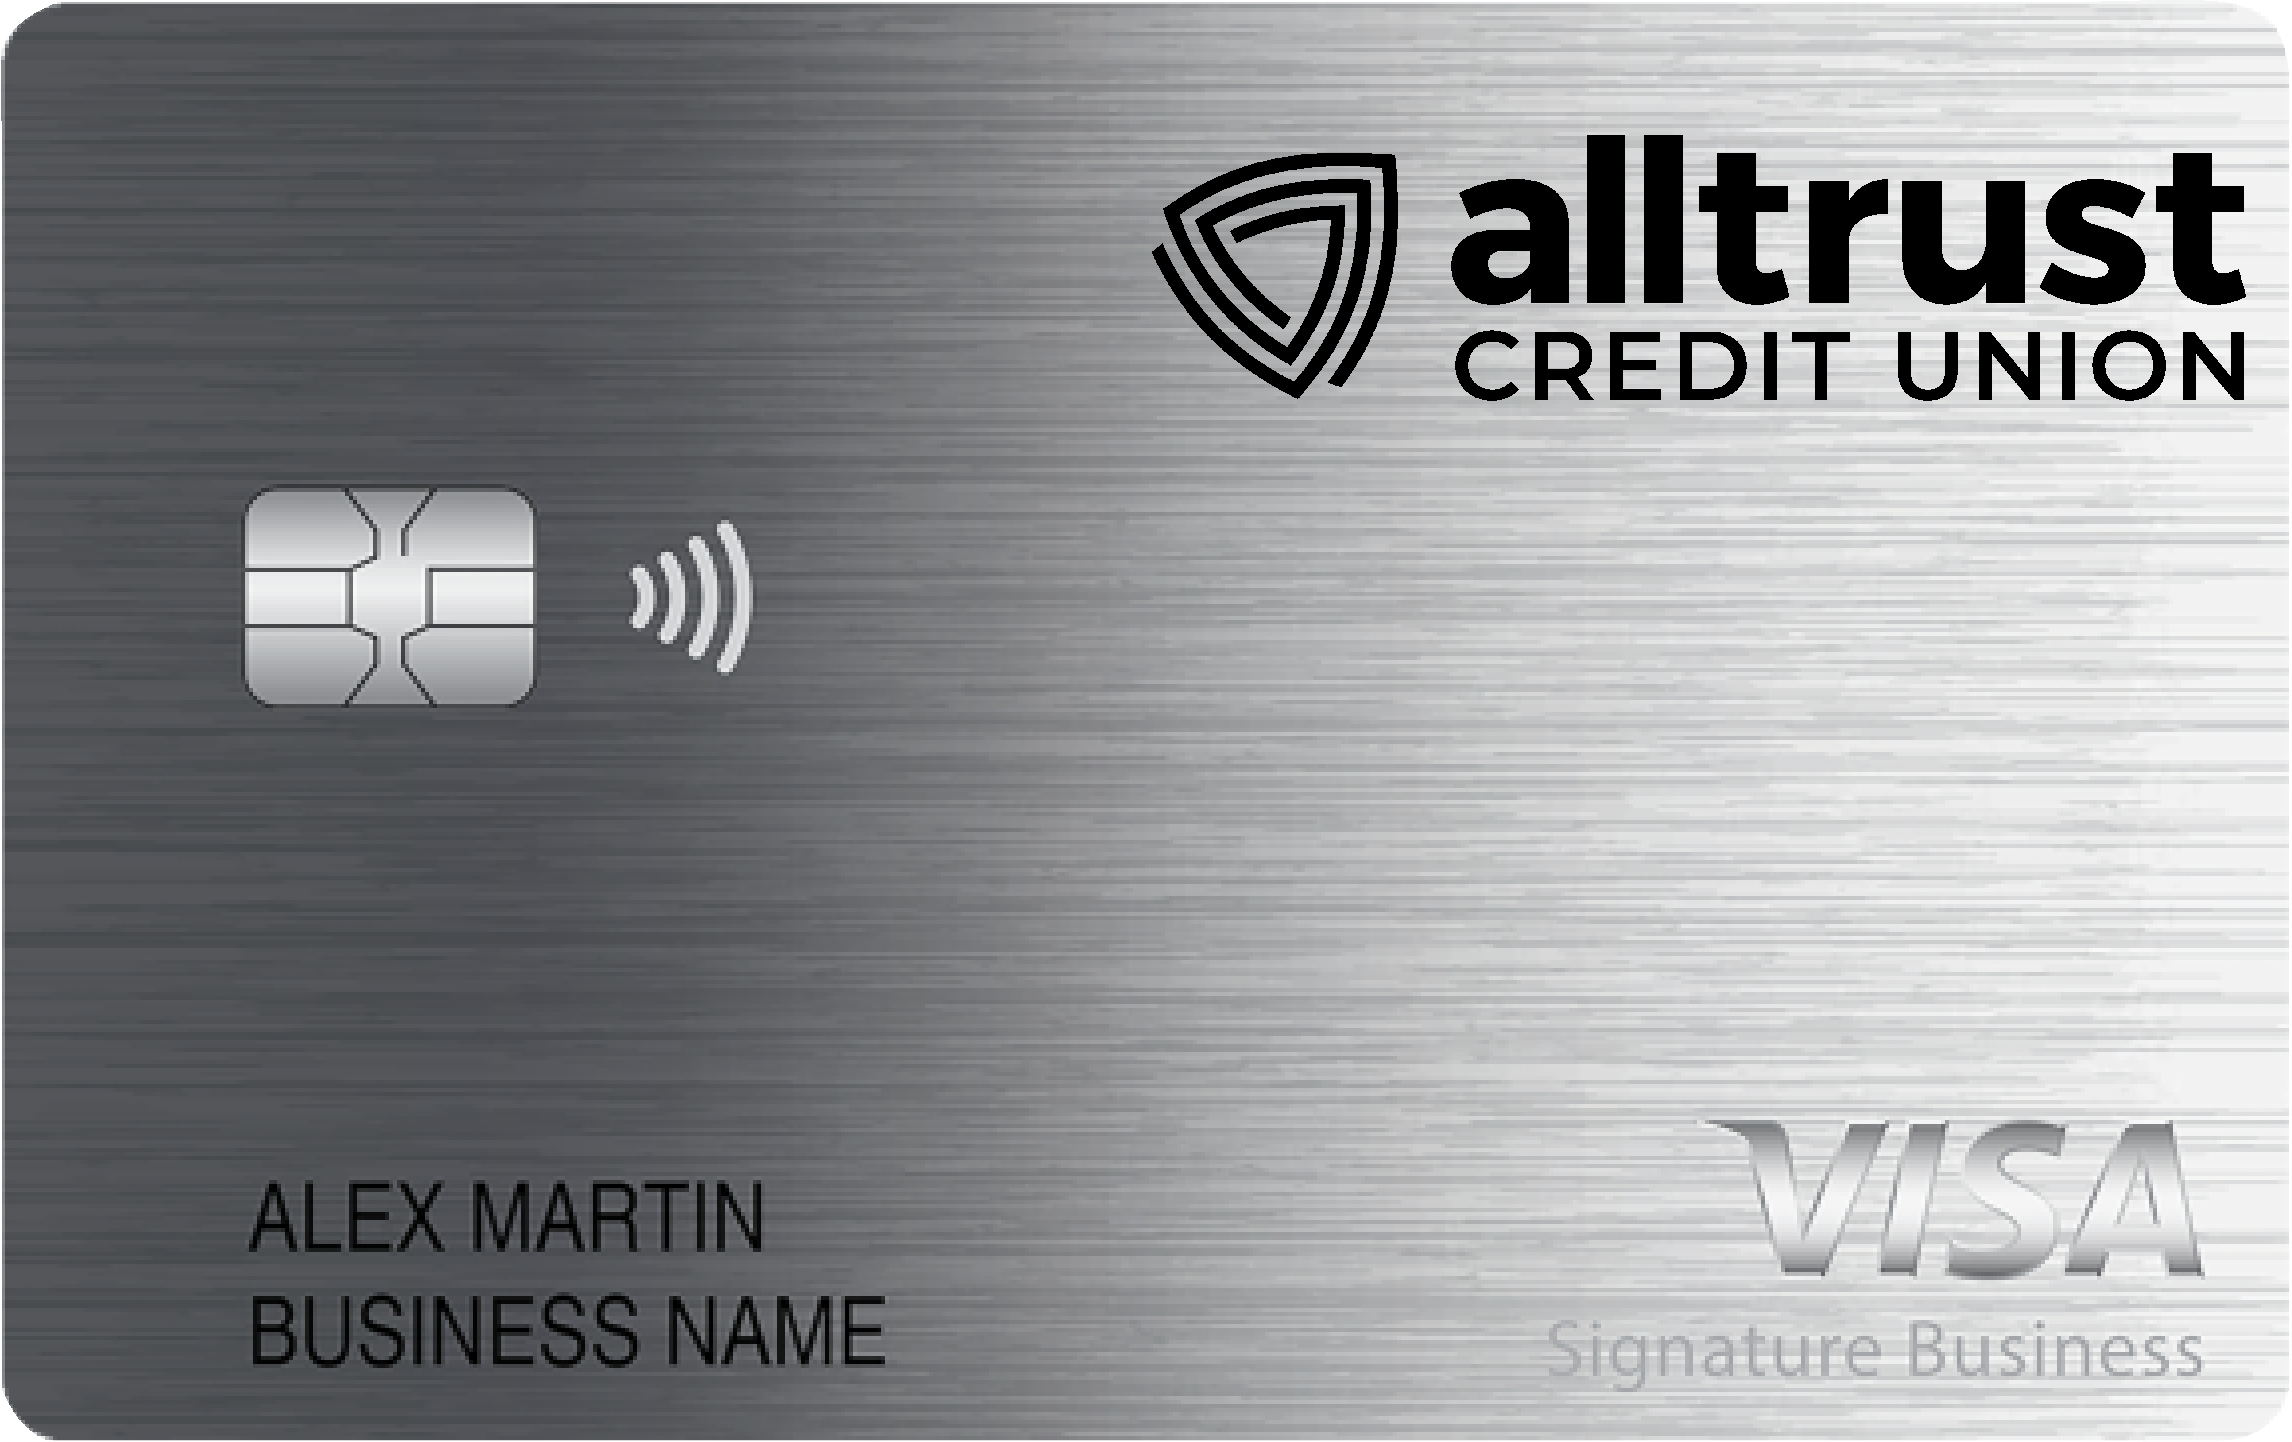 Alltrust Credit Union Smart Business Rewards Card